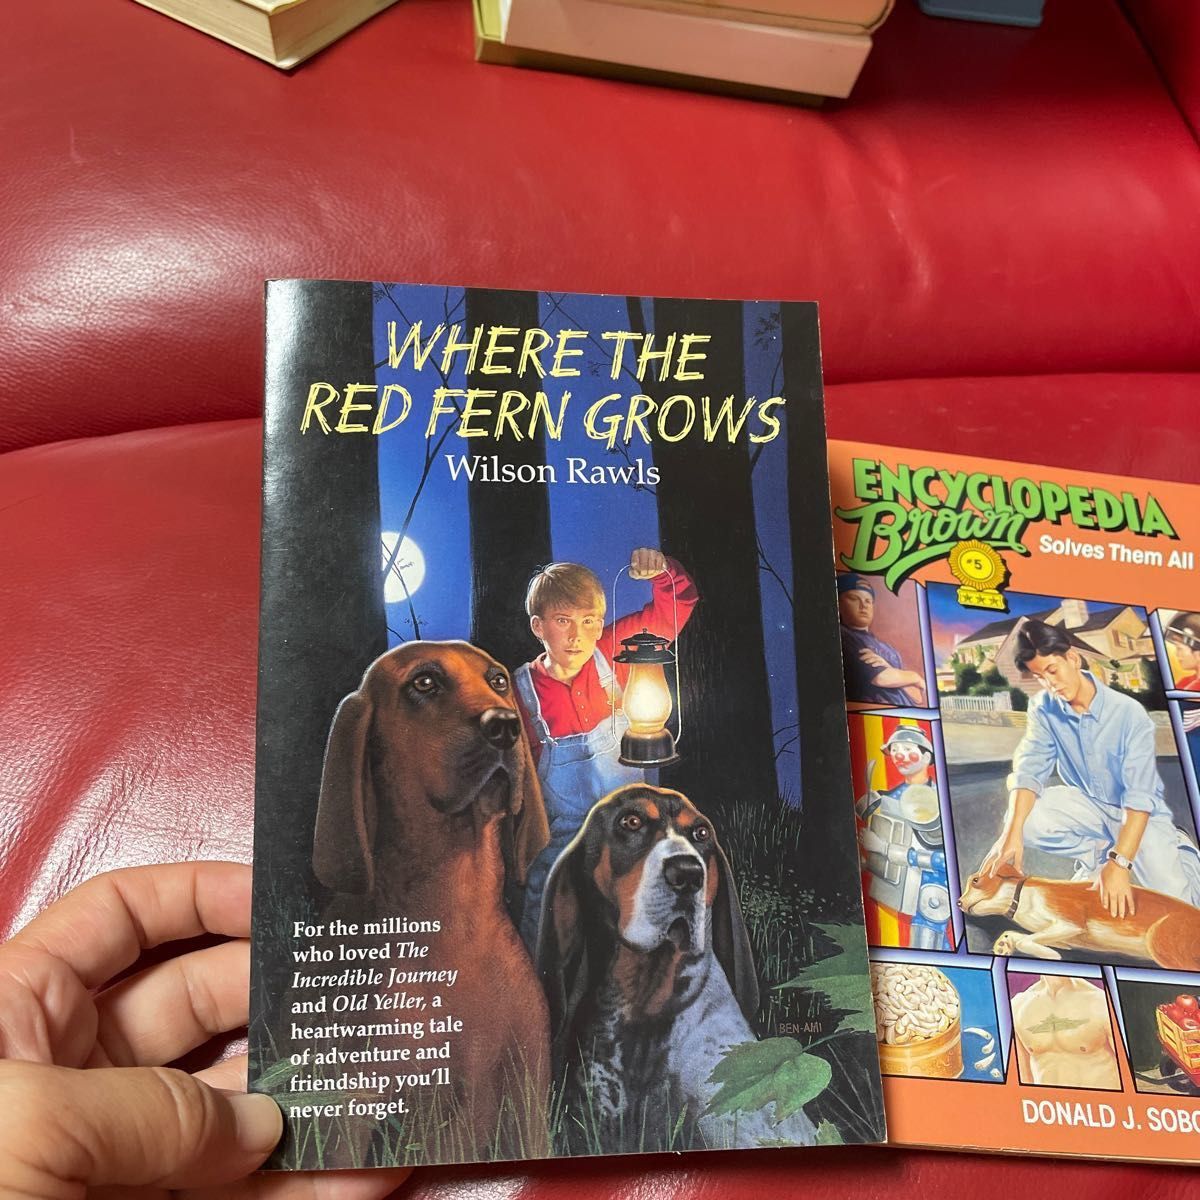 「Where the red fern grows」と「Encyclopedia brown」とチャーリーとチョコレート工場の3冊